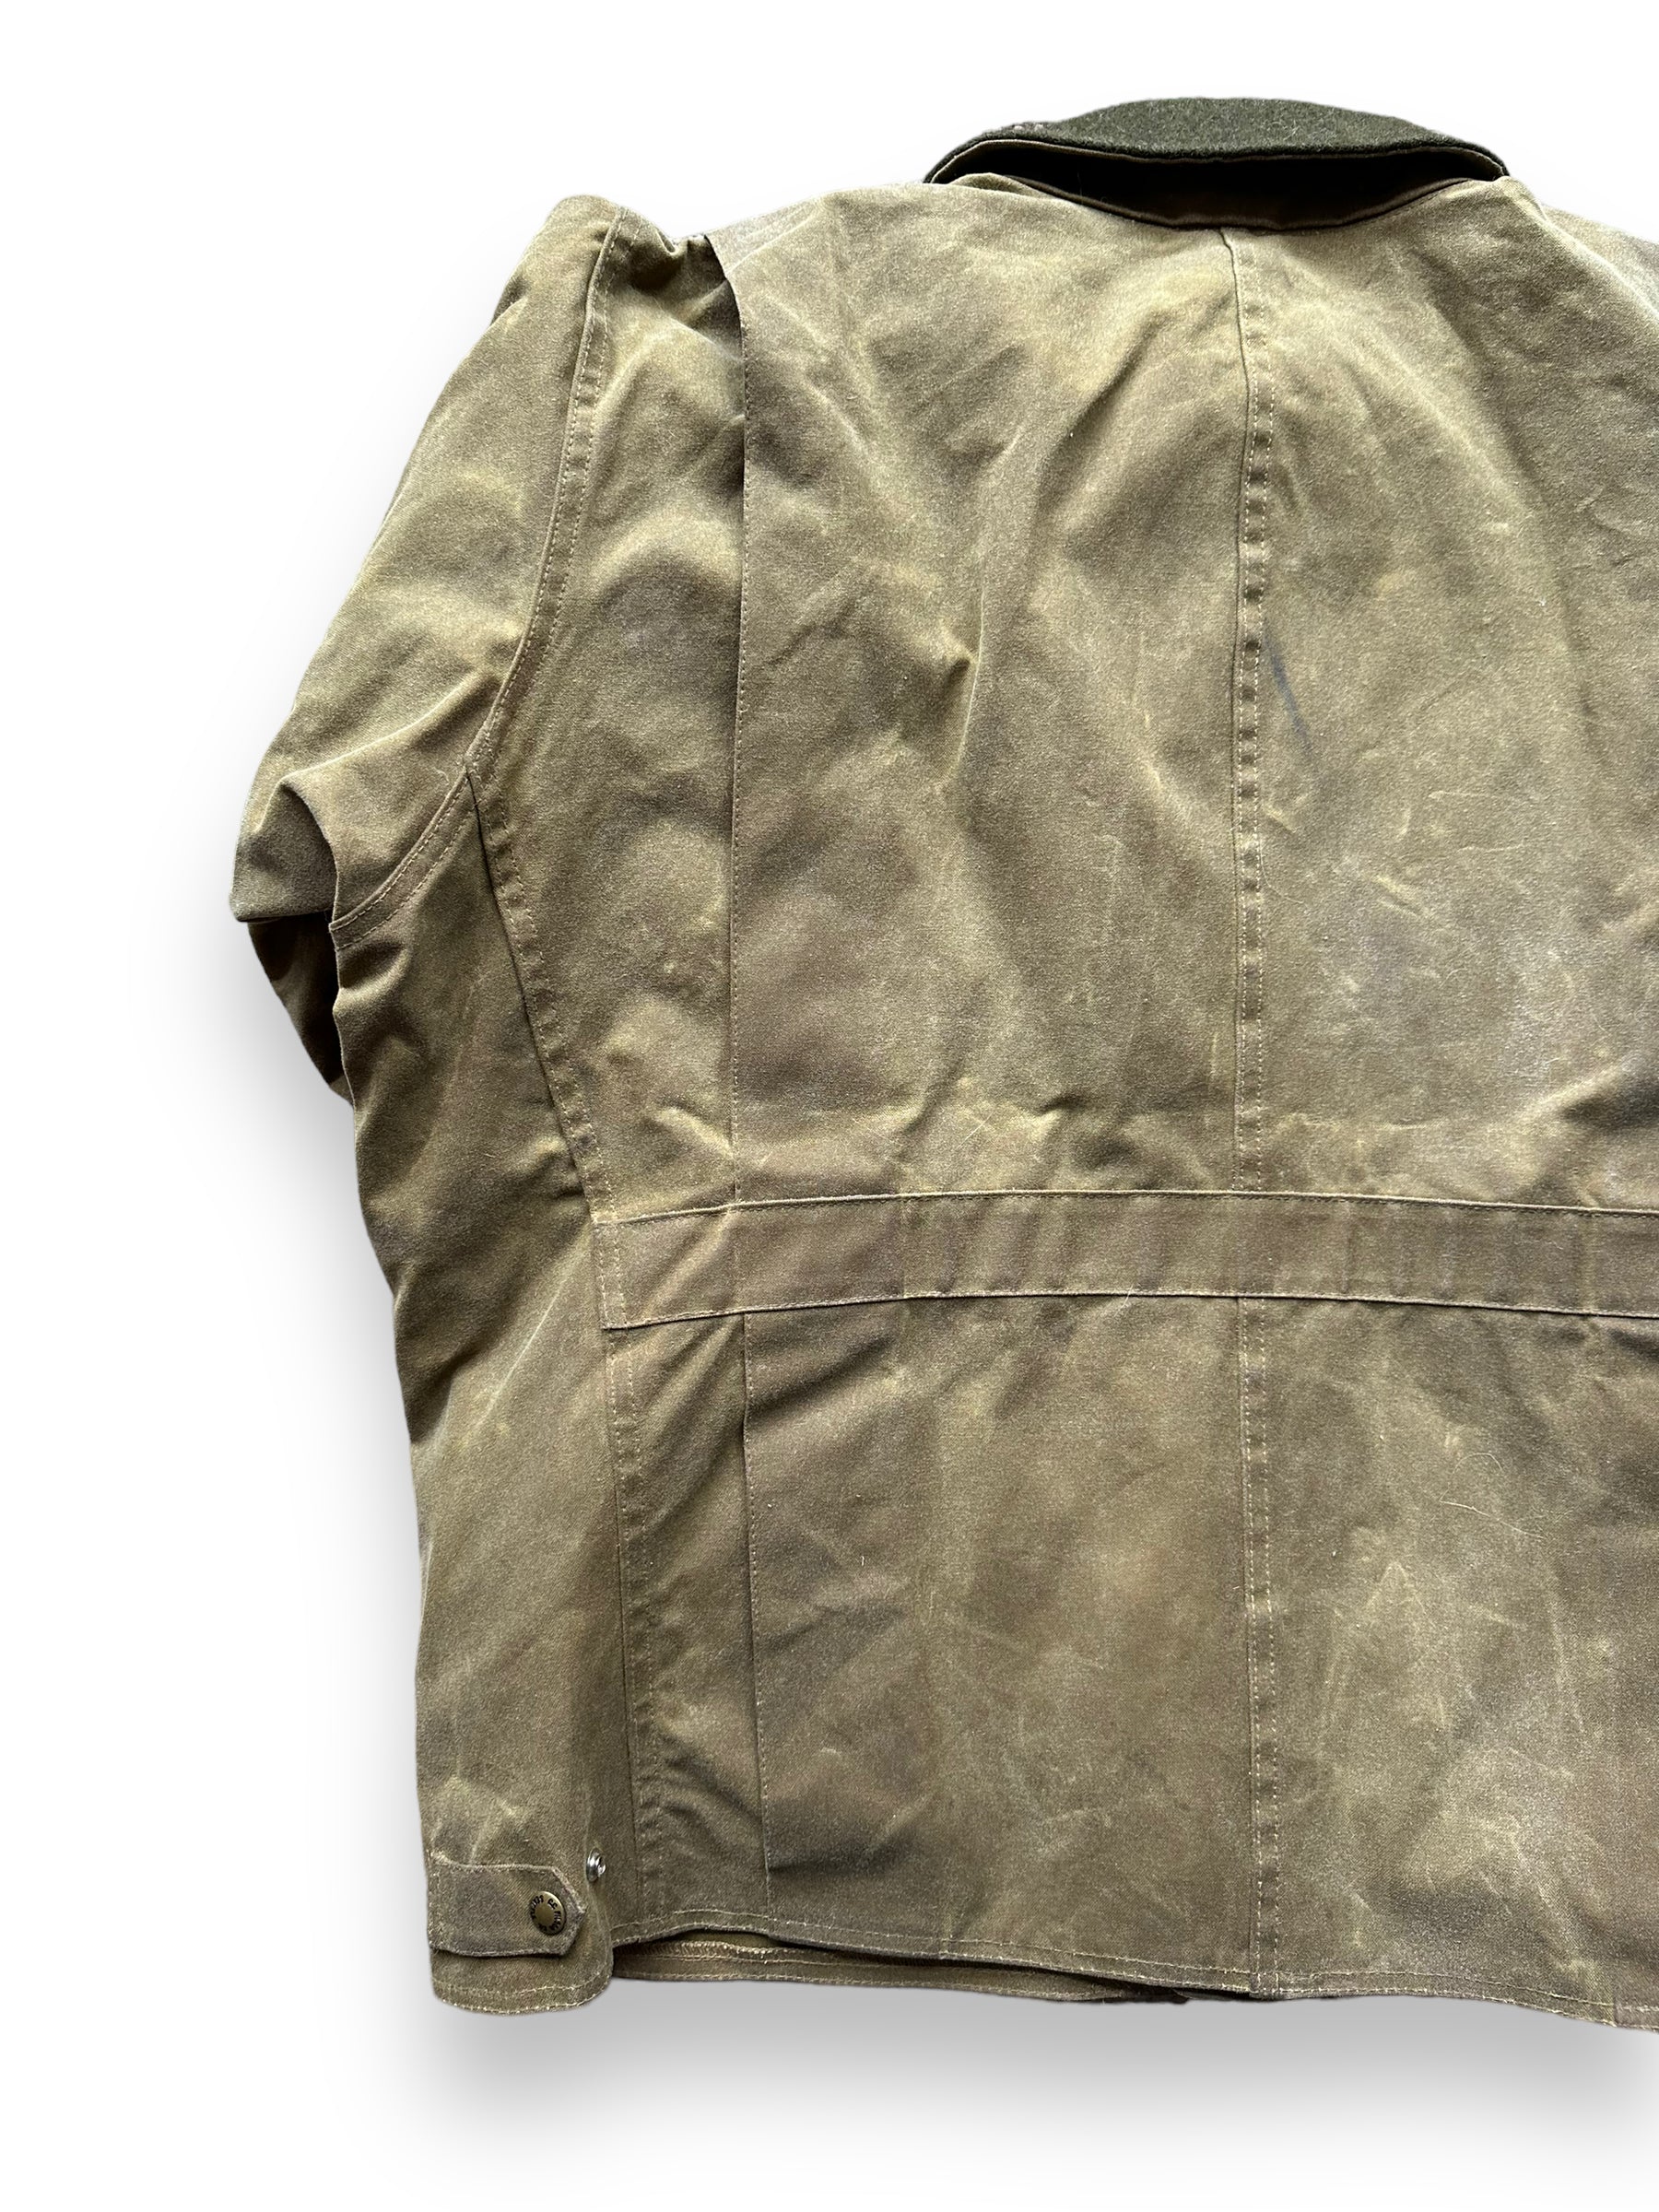 Rear Left View of Filson Tin Cloth Jacket SZ XL |  Barn Owl Vintage Goods | Filson Workwear Seattle